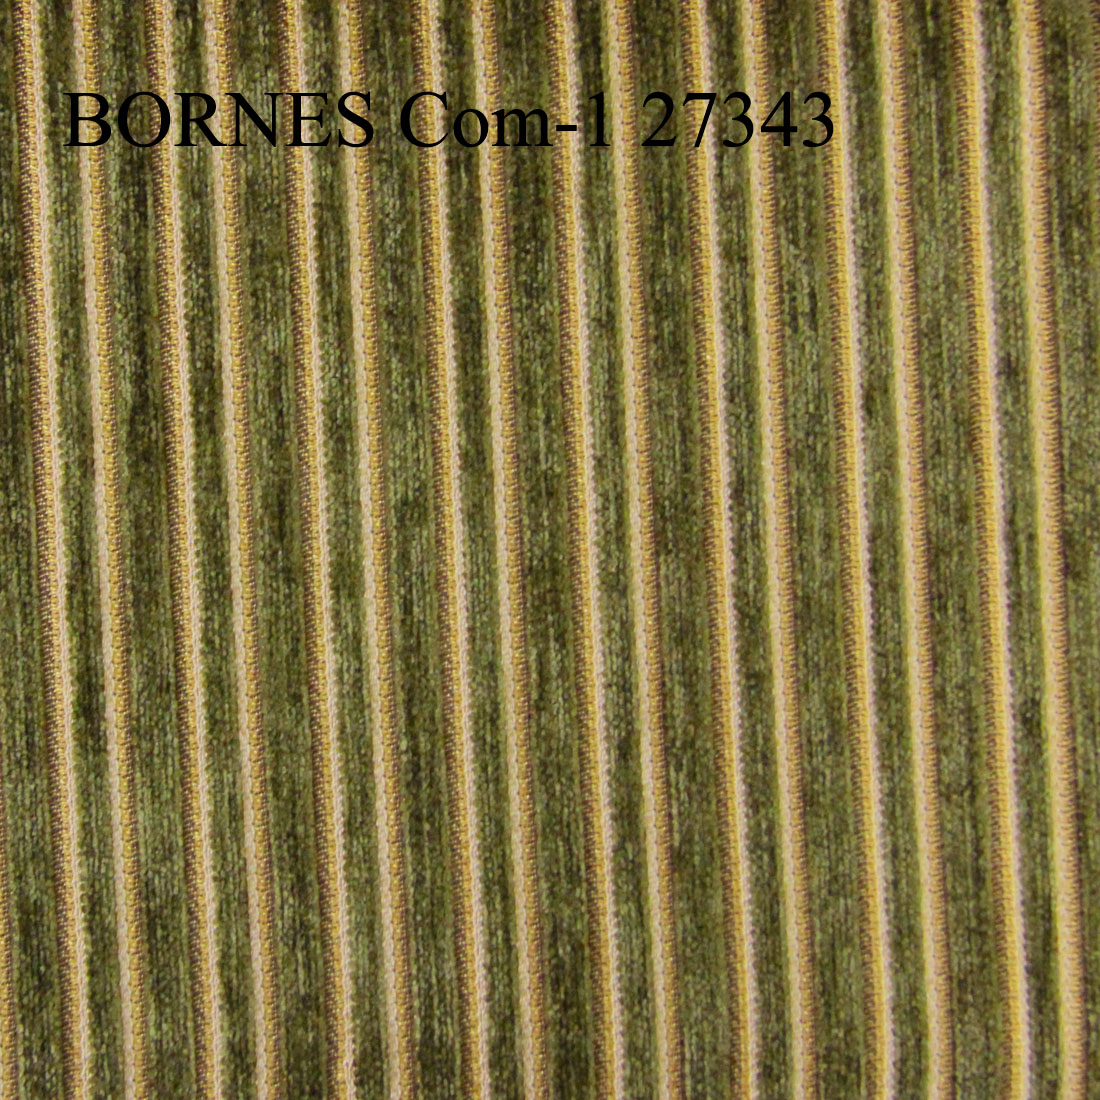 COM BORNES 27343